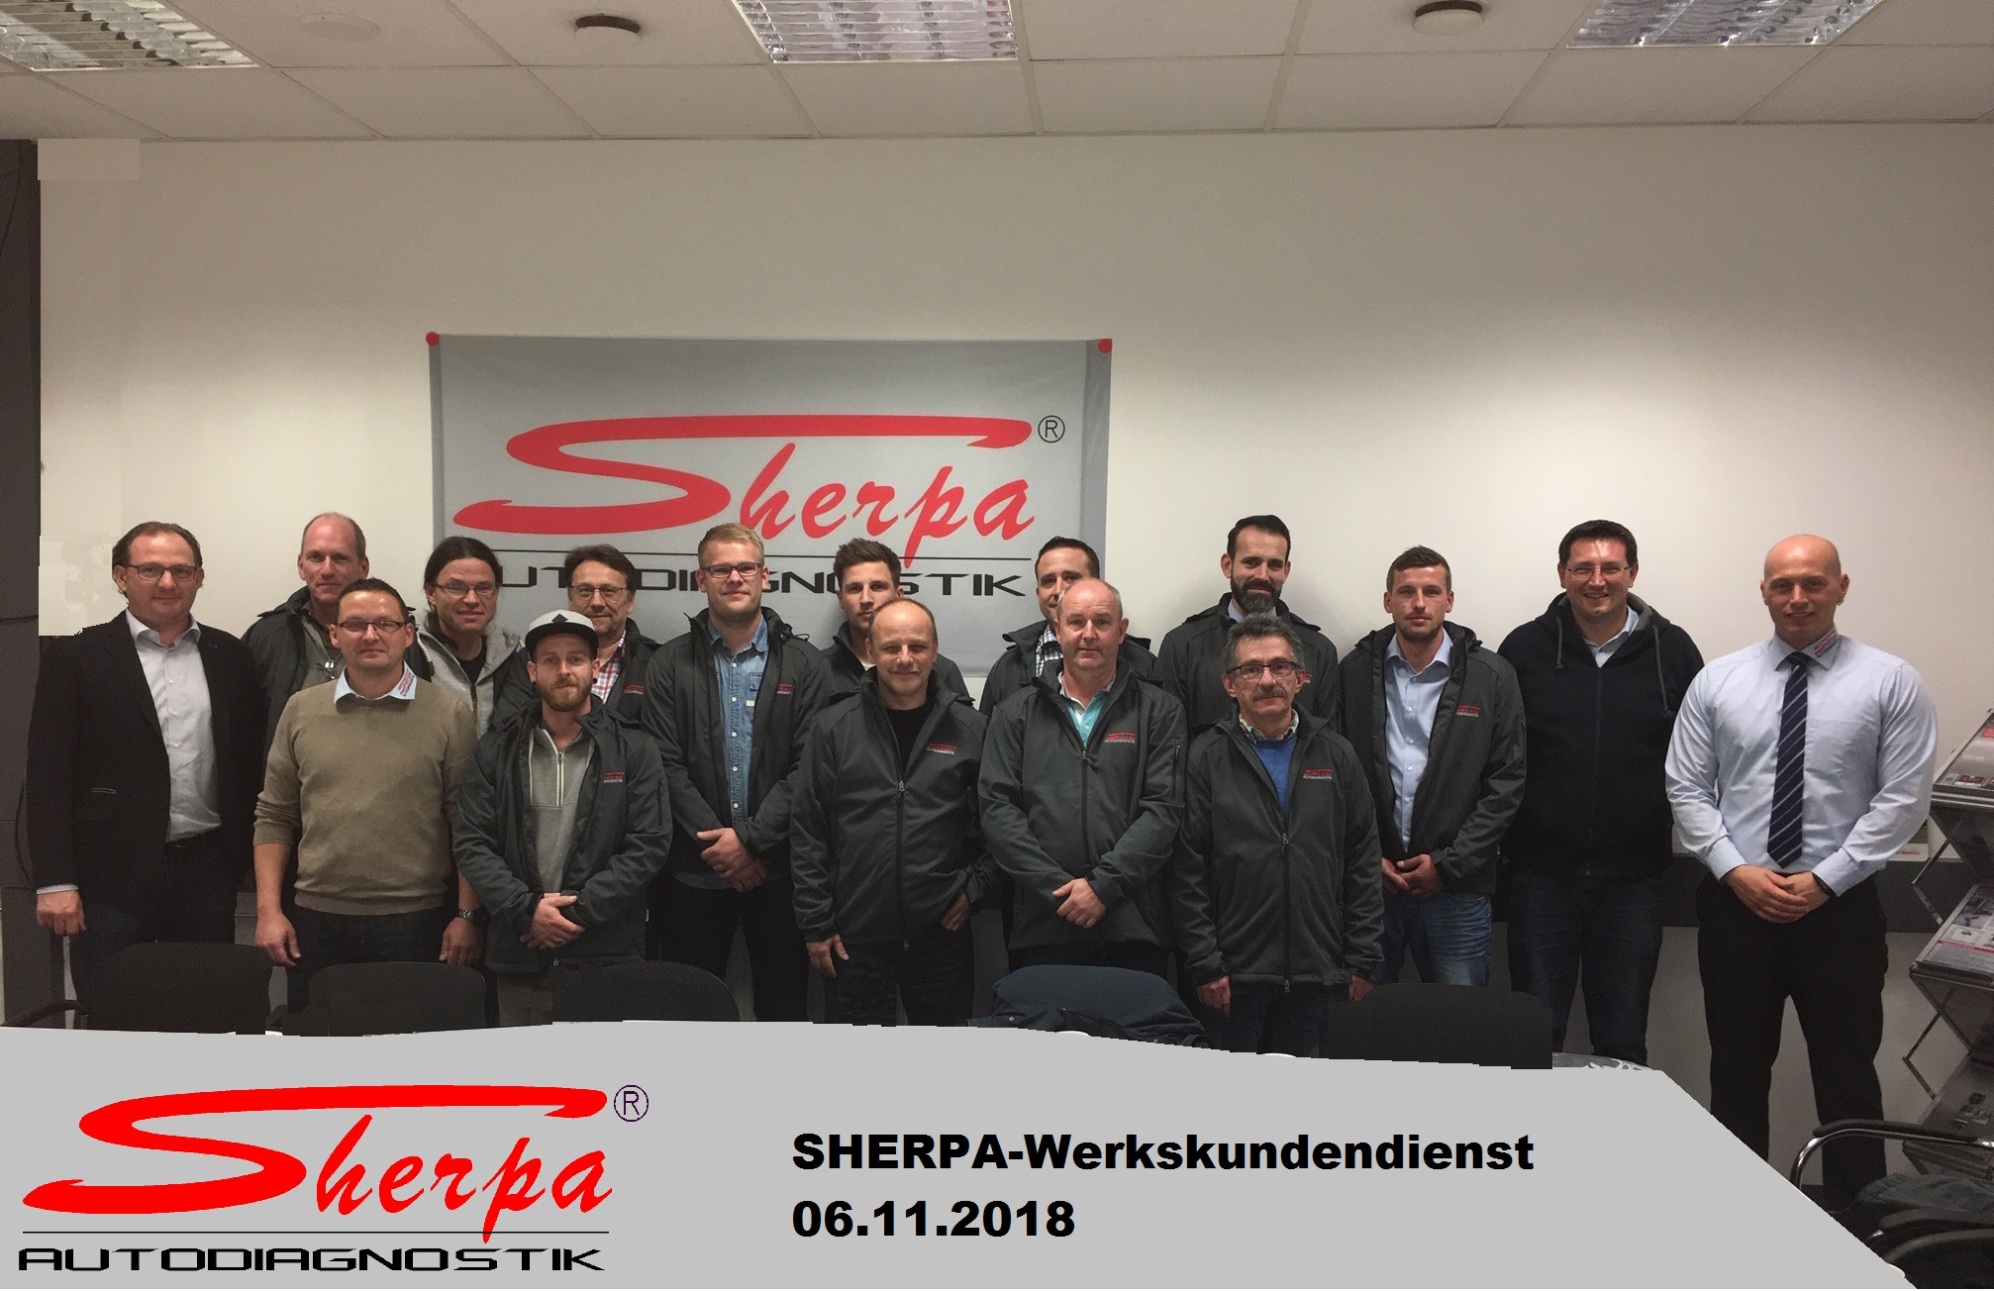 Sherpa Factory Customer Service